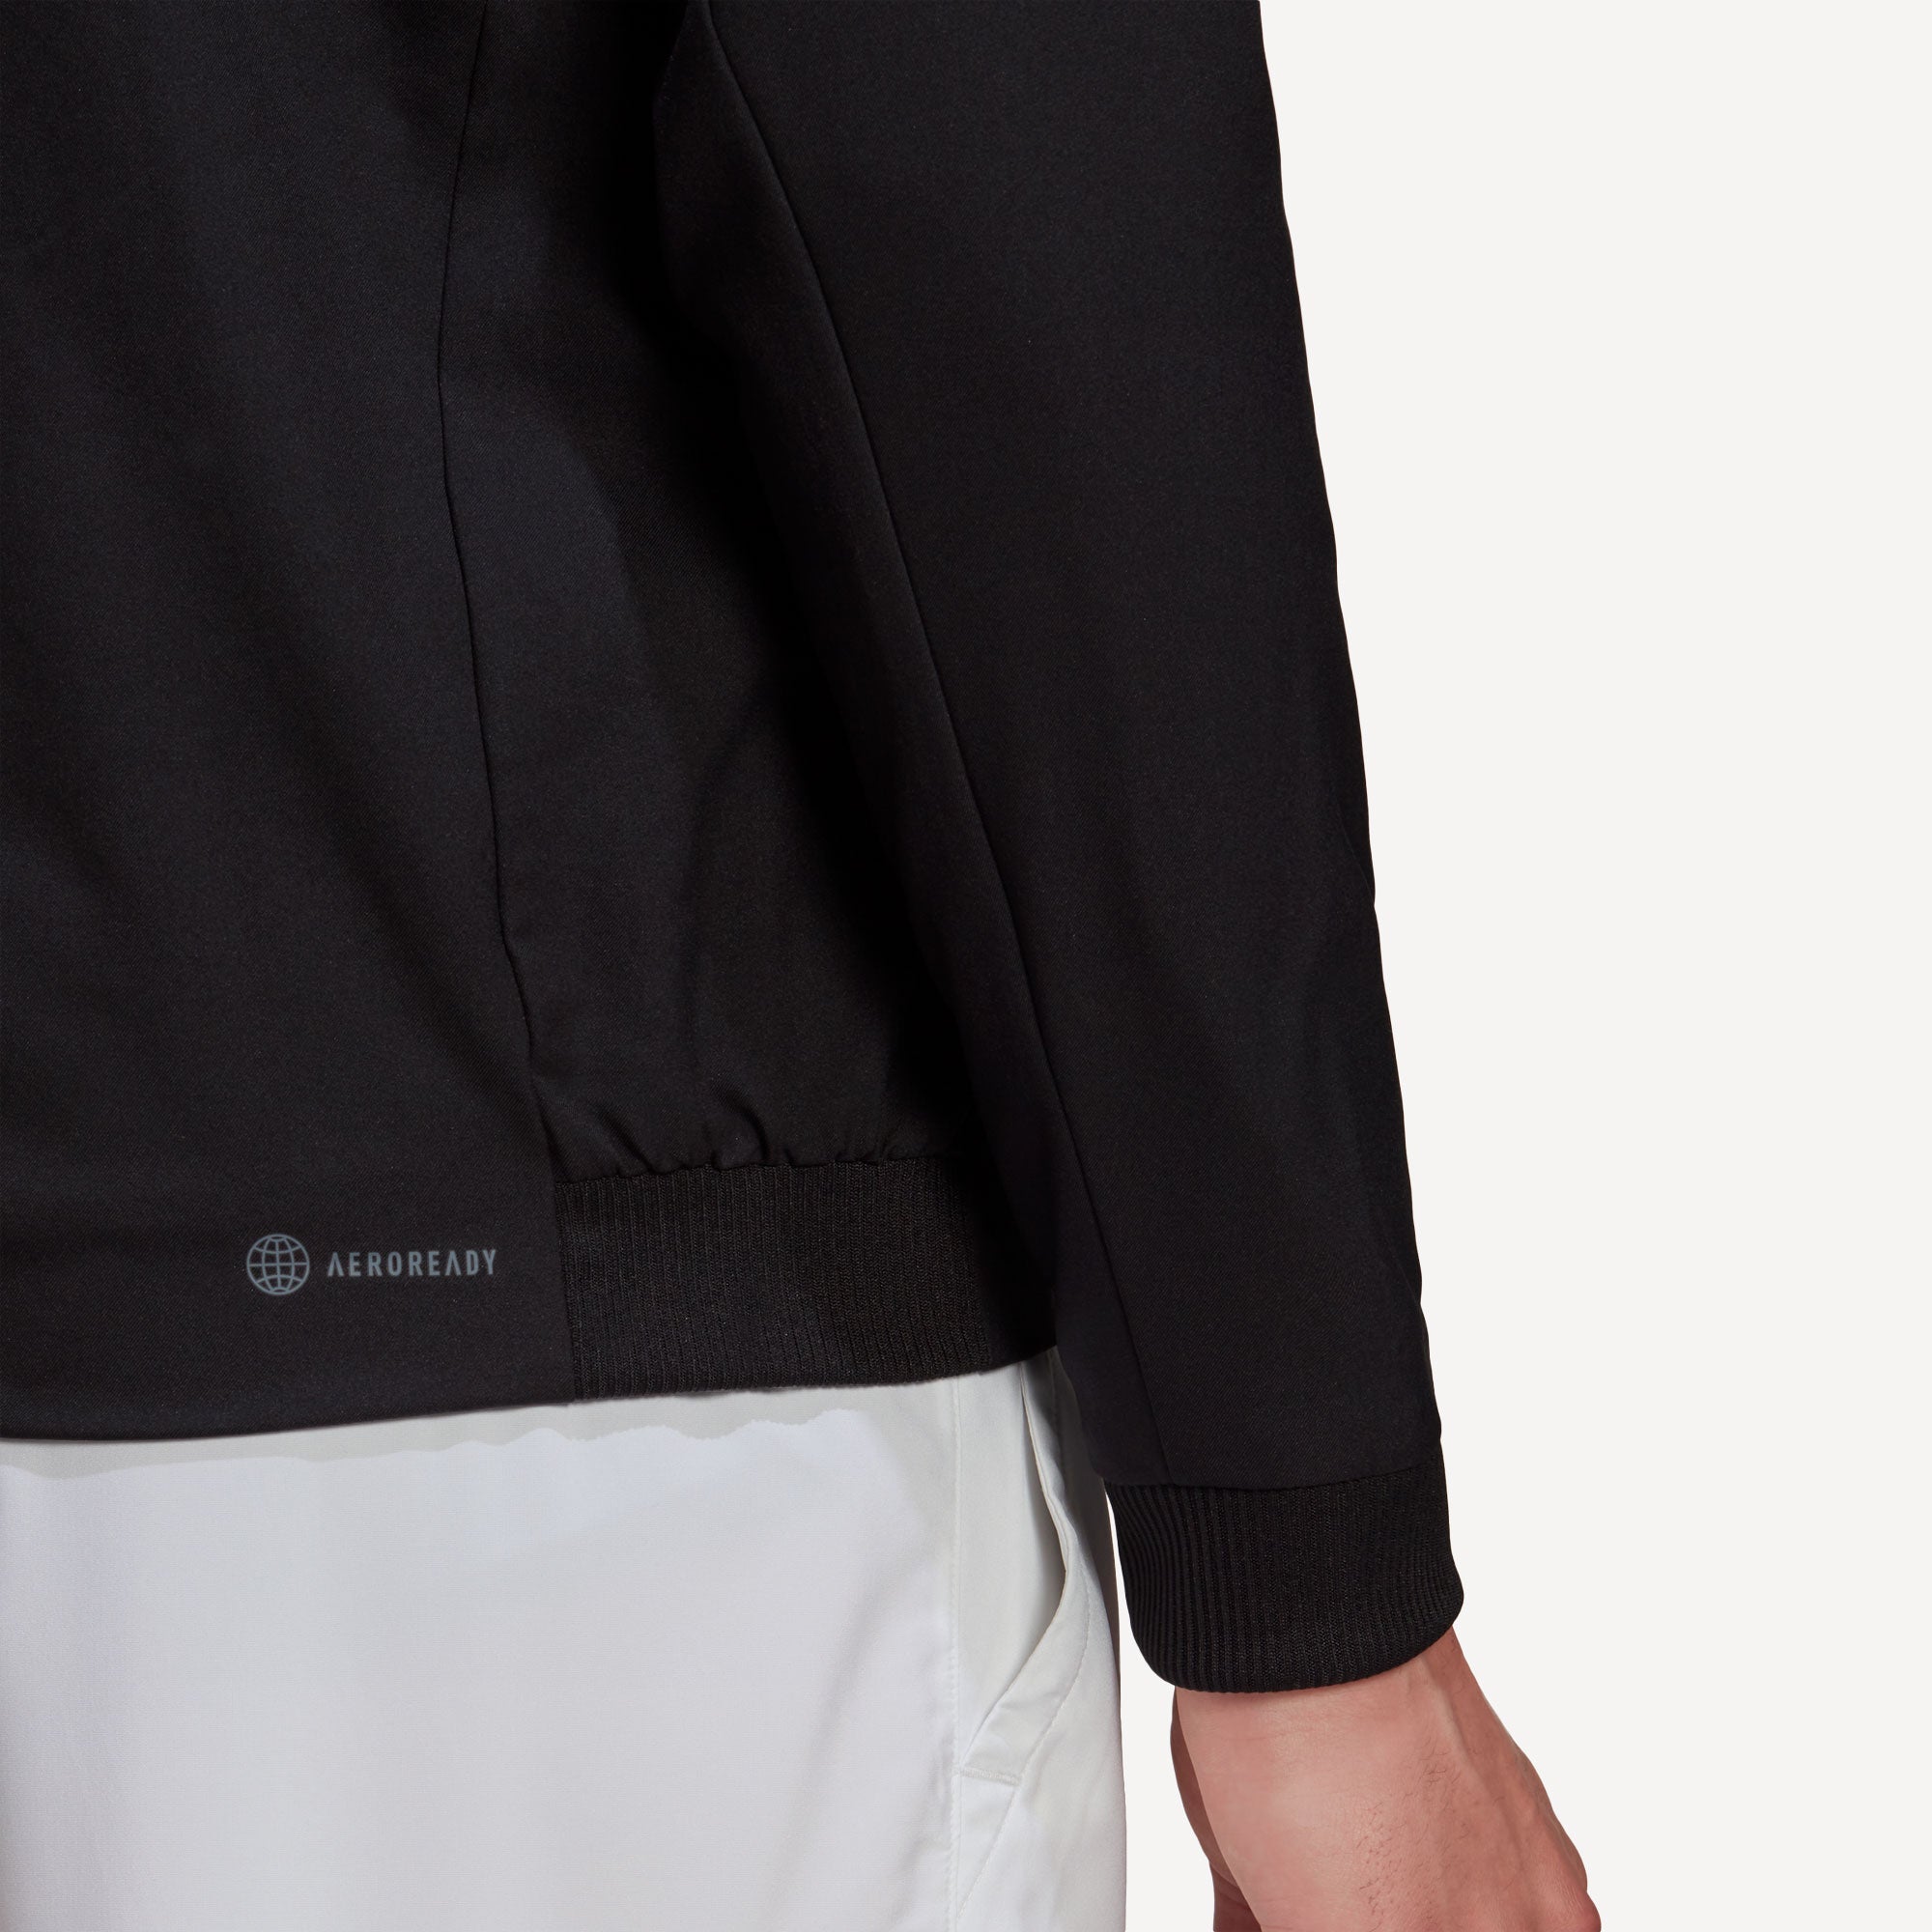 adidas Melbourne Men's Stretch Woven Tennis Jacket Black (7)